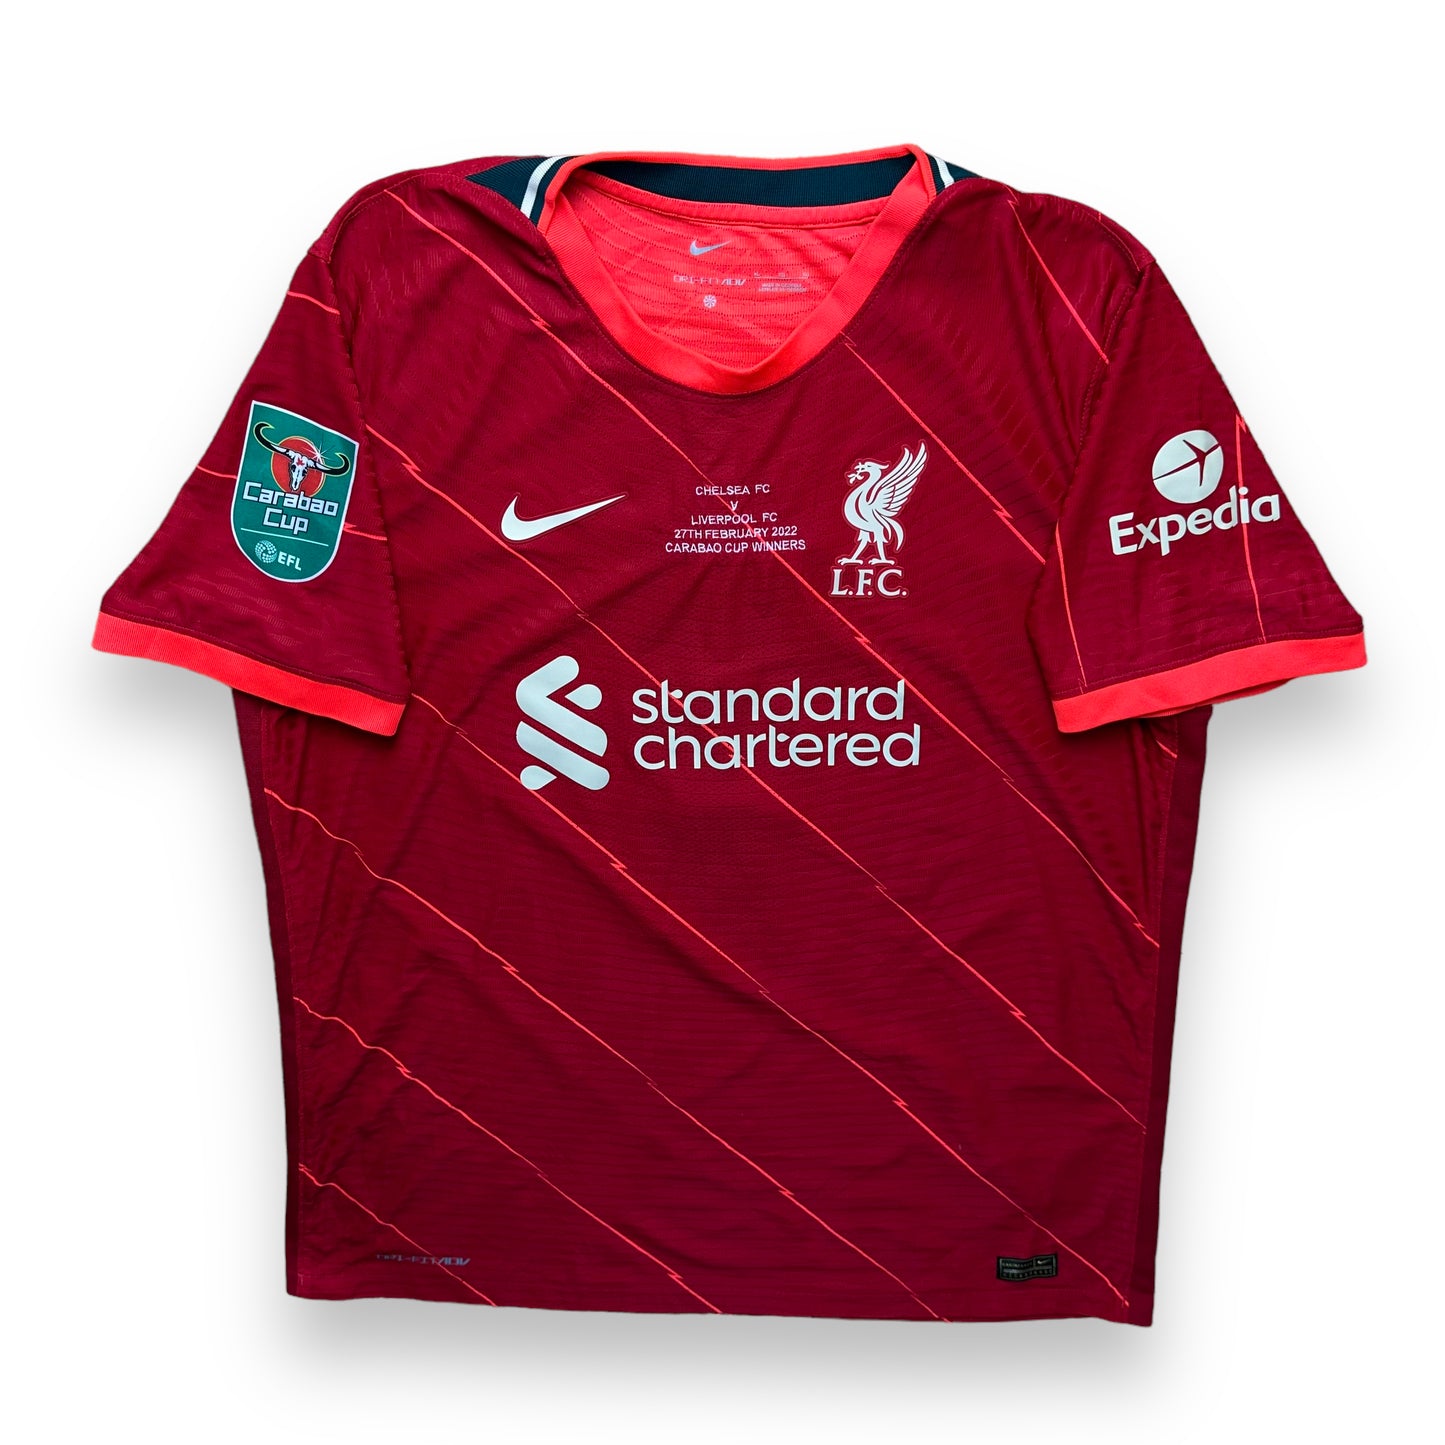 Liverpool 2021-22 Home Shirt (XL) Milner #7